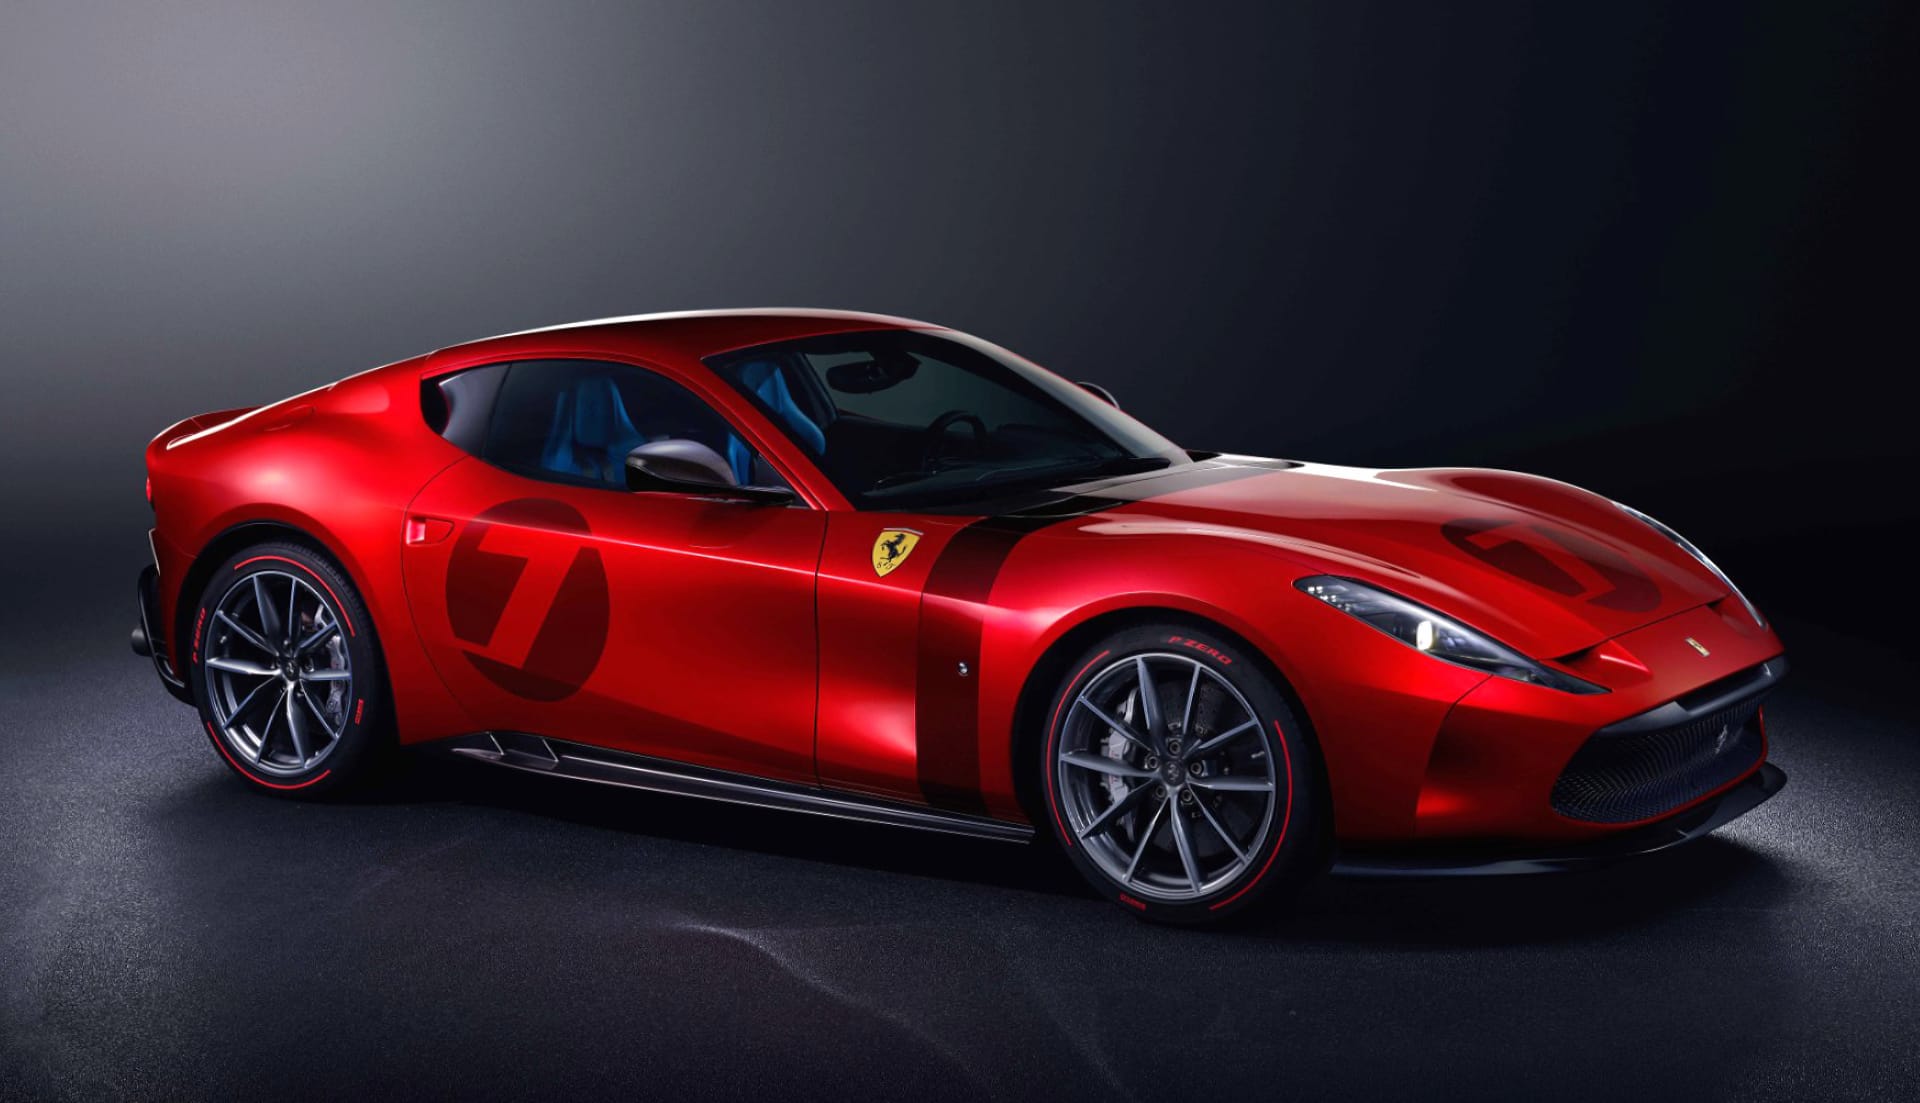 Ferrari Omologata at 1334 x 750 iPhone 7 size wallpapers HD quality